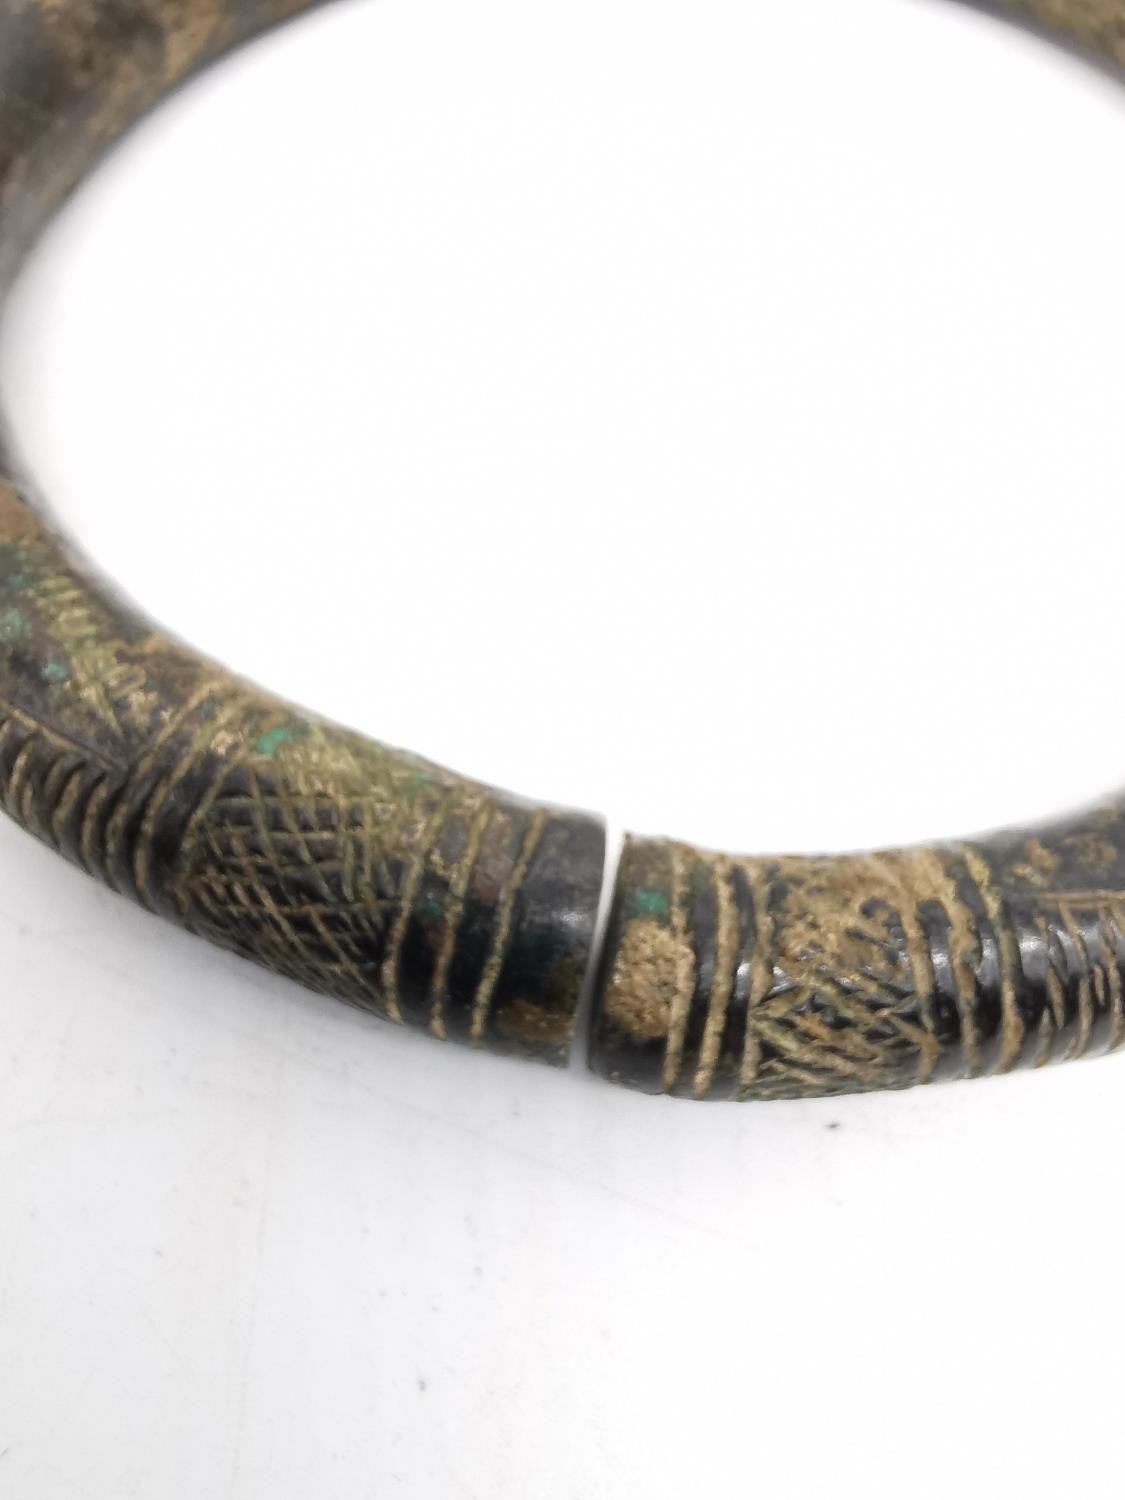 An ancient Iranian bronze torque arm bracelet/necklace with incised design. Diameter 12cm, - Image 4 of 6